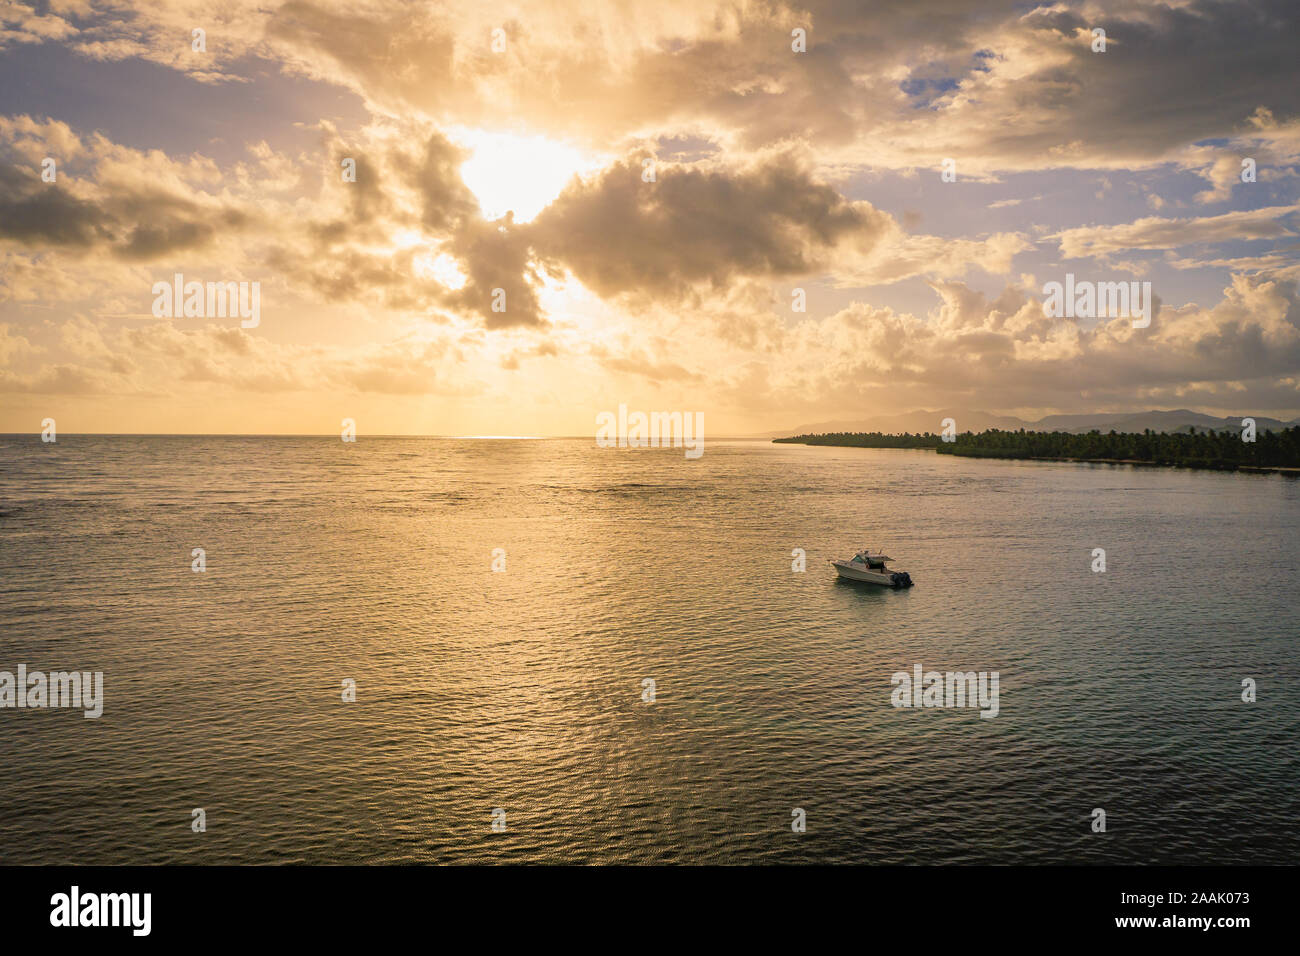 Lujoso barco anclado cerca de playa tropical exótica..vista aérea al atardecer de la península de Samaná en República Dominicana. Foto de stock